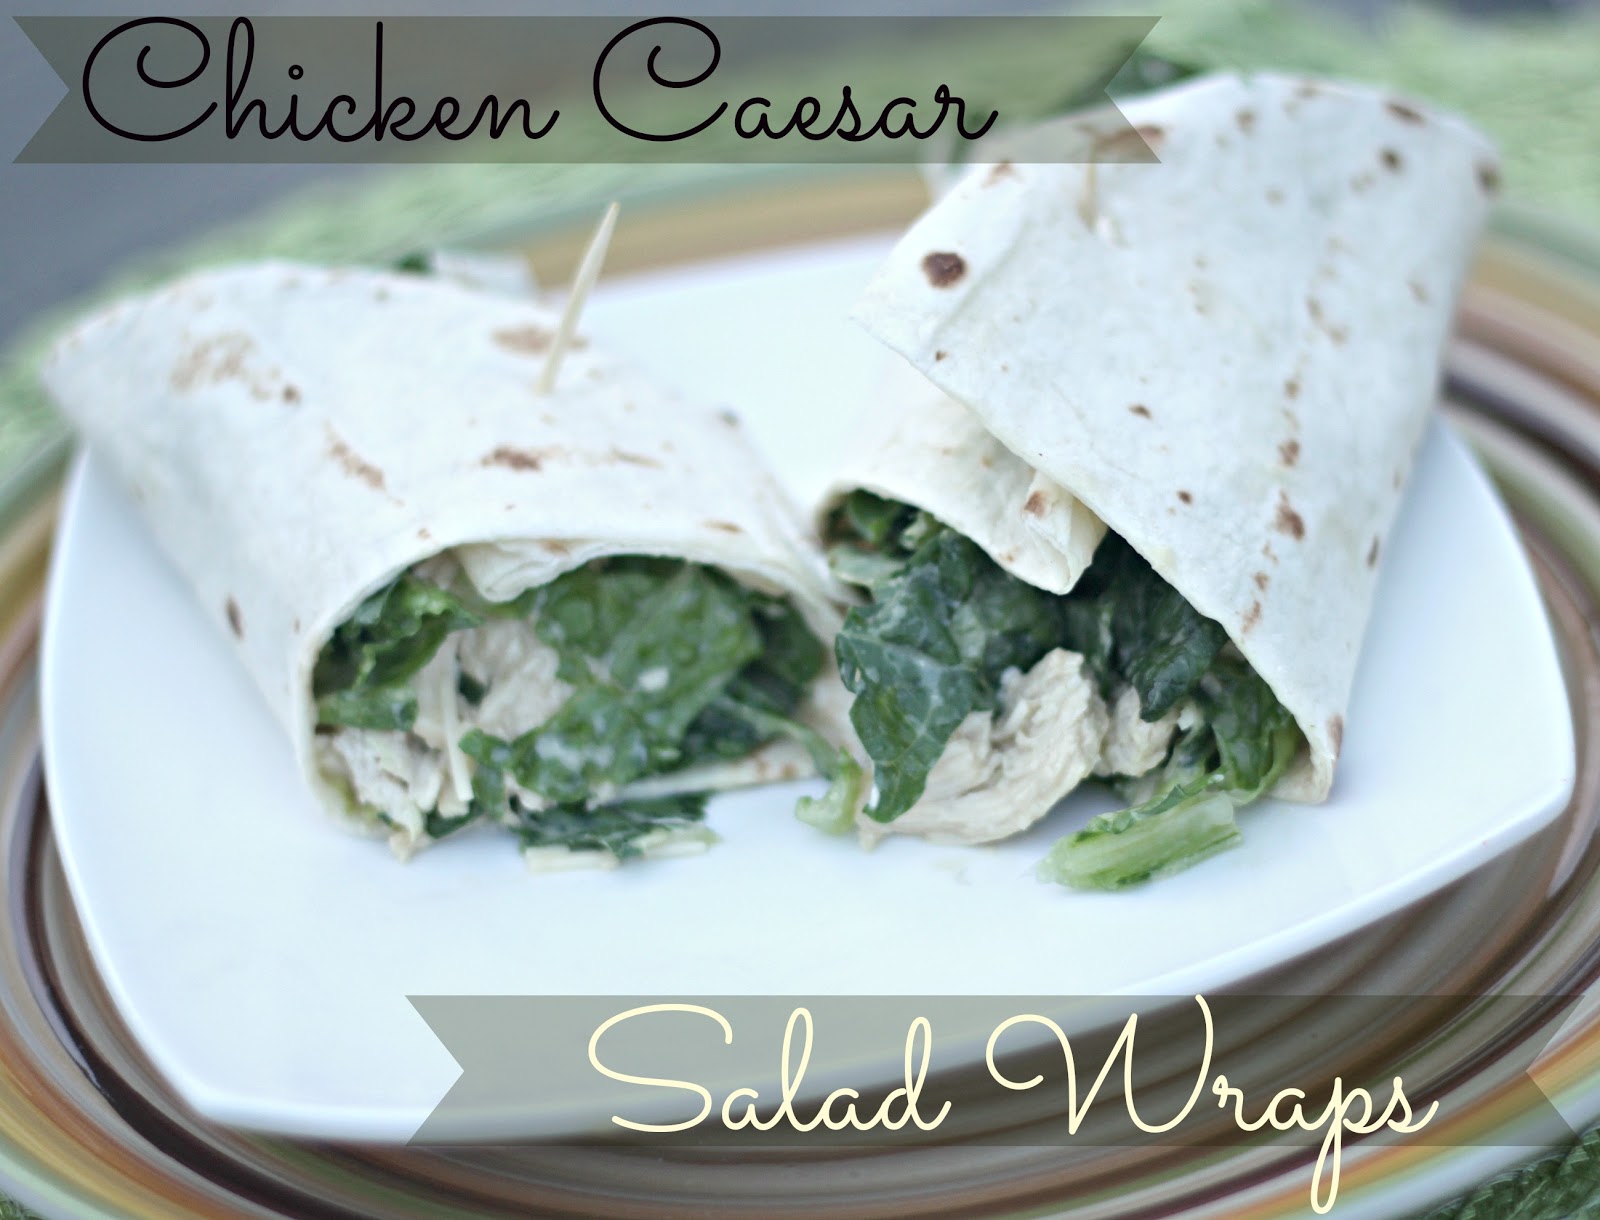 The Unsophisticated Kitchen: Chicken Caesar Salad Wraps